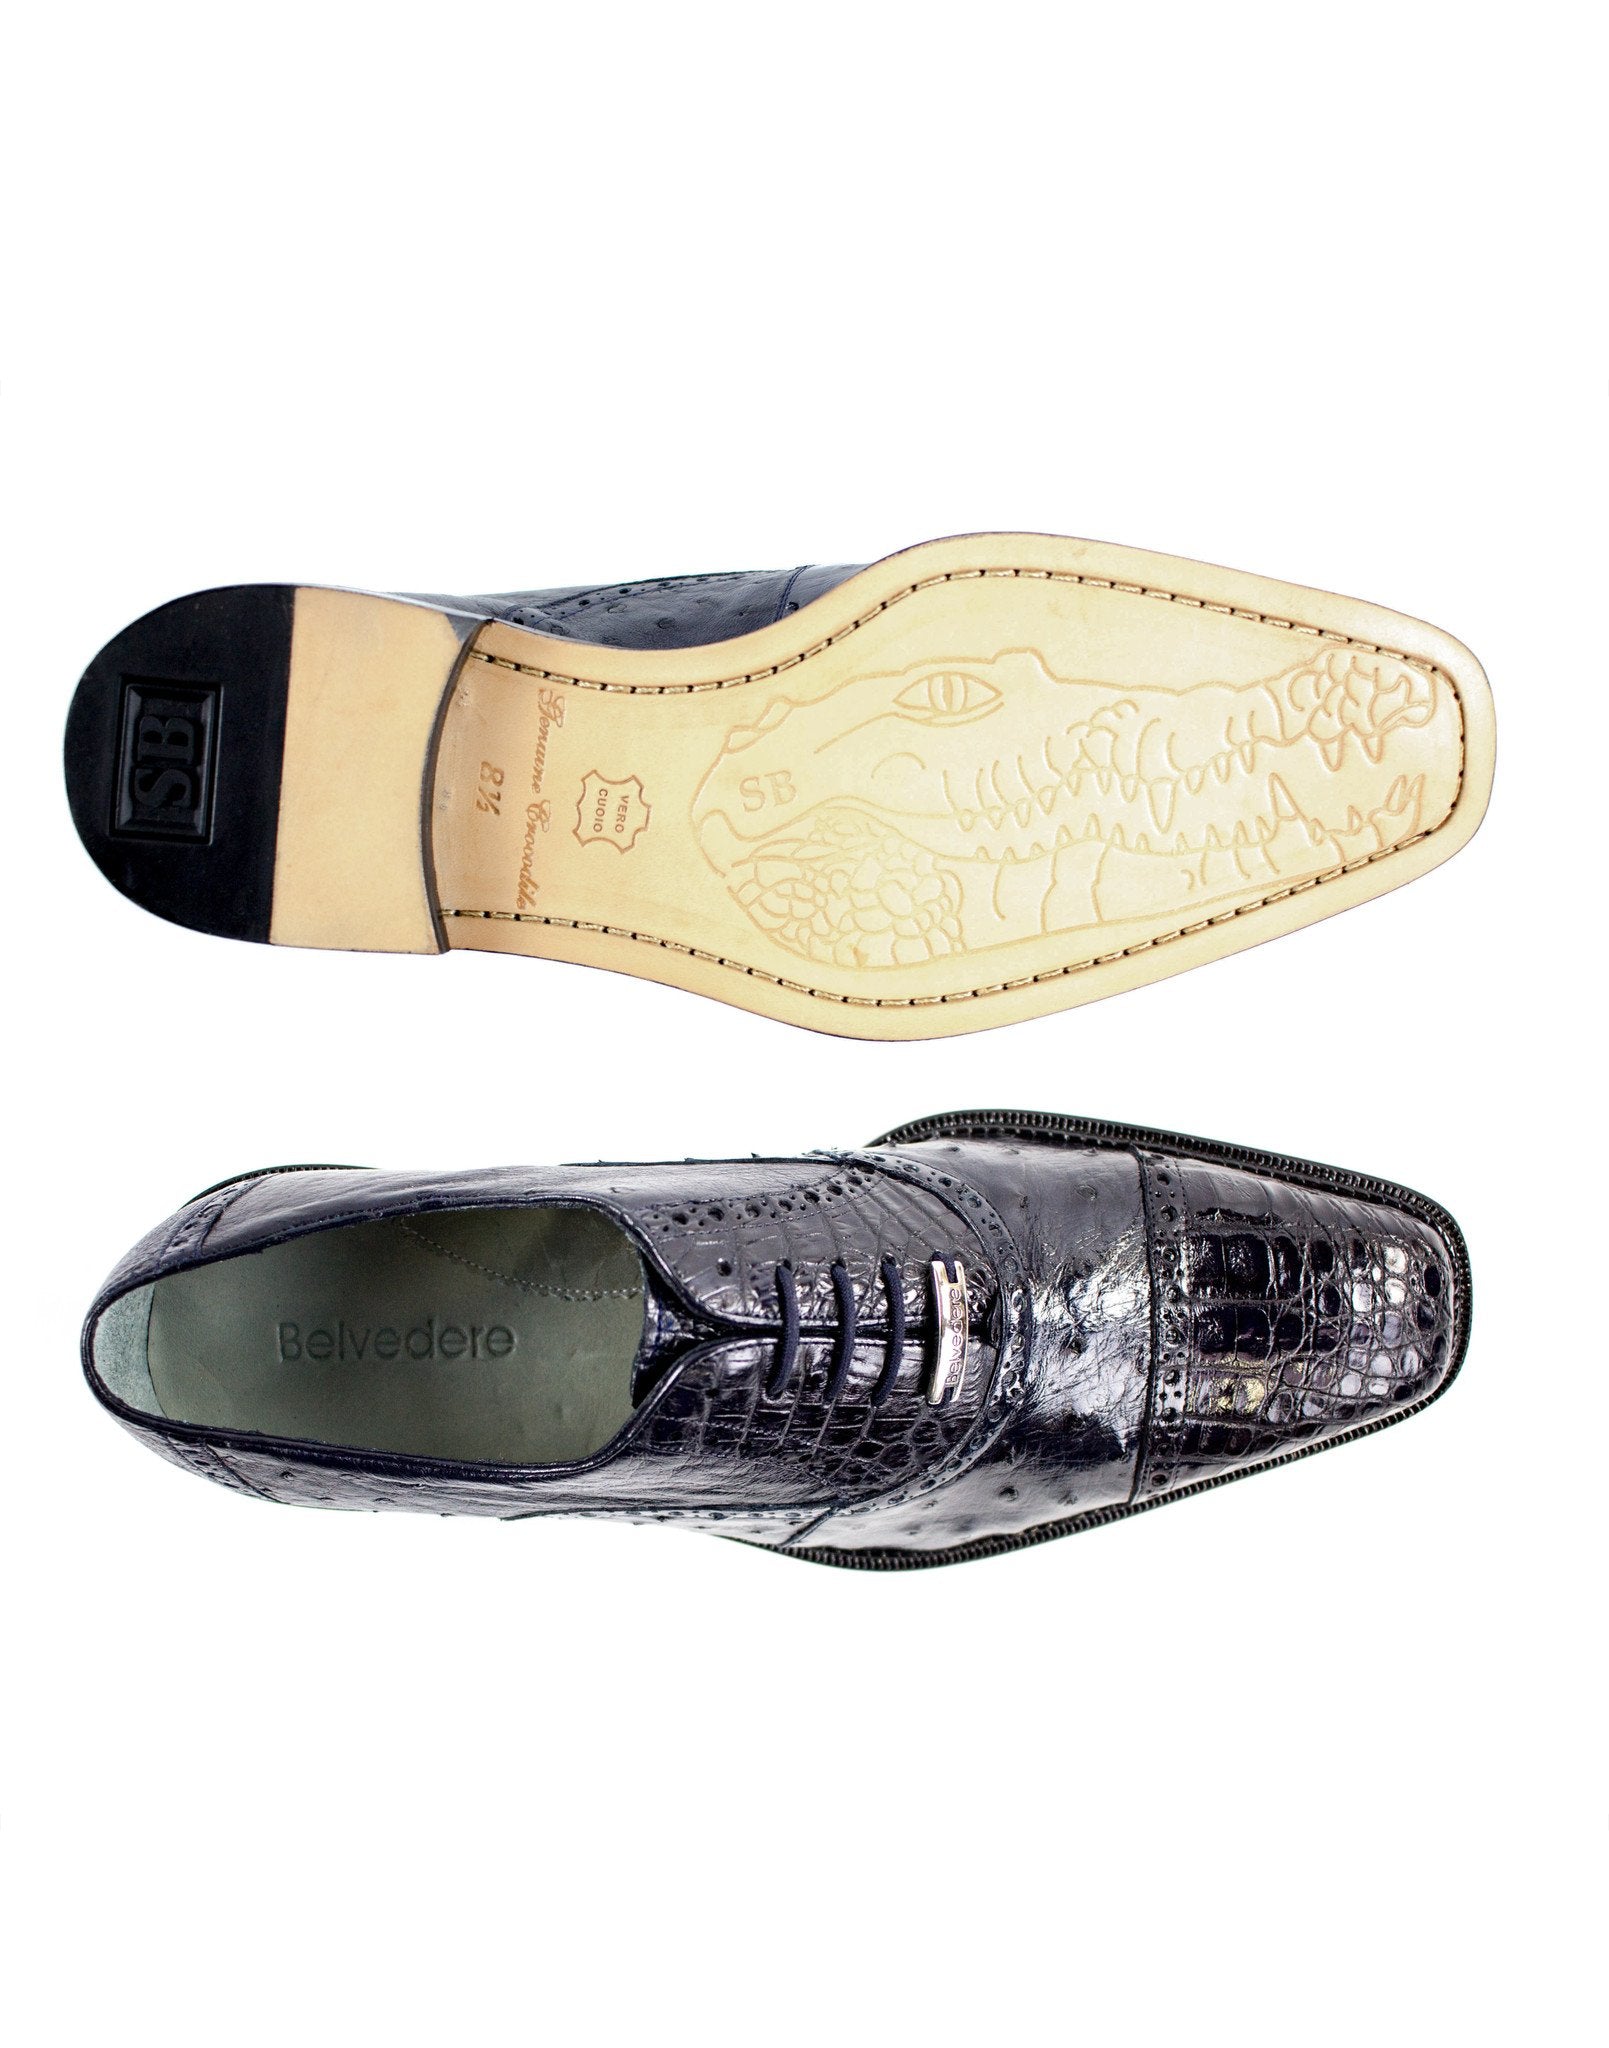 Belvedere - Onesto II, Genuine Ostrich and Crocodile Dress Shoe - Navy - 1419 - IN STORE